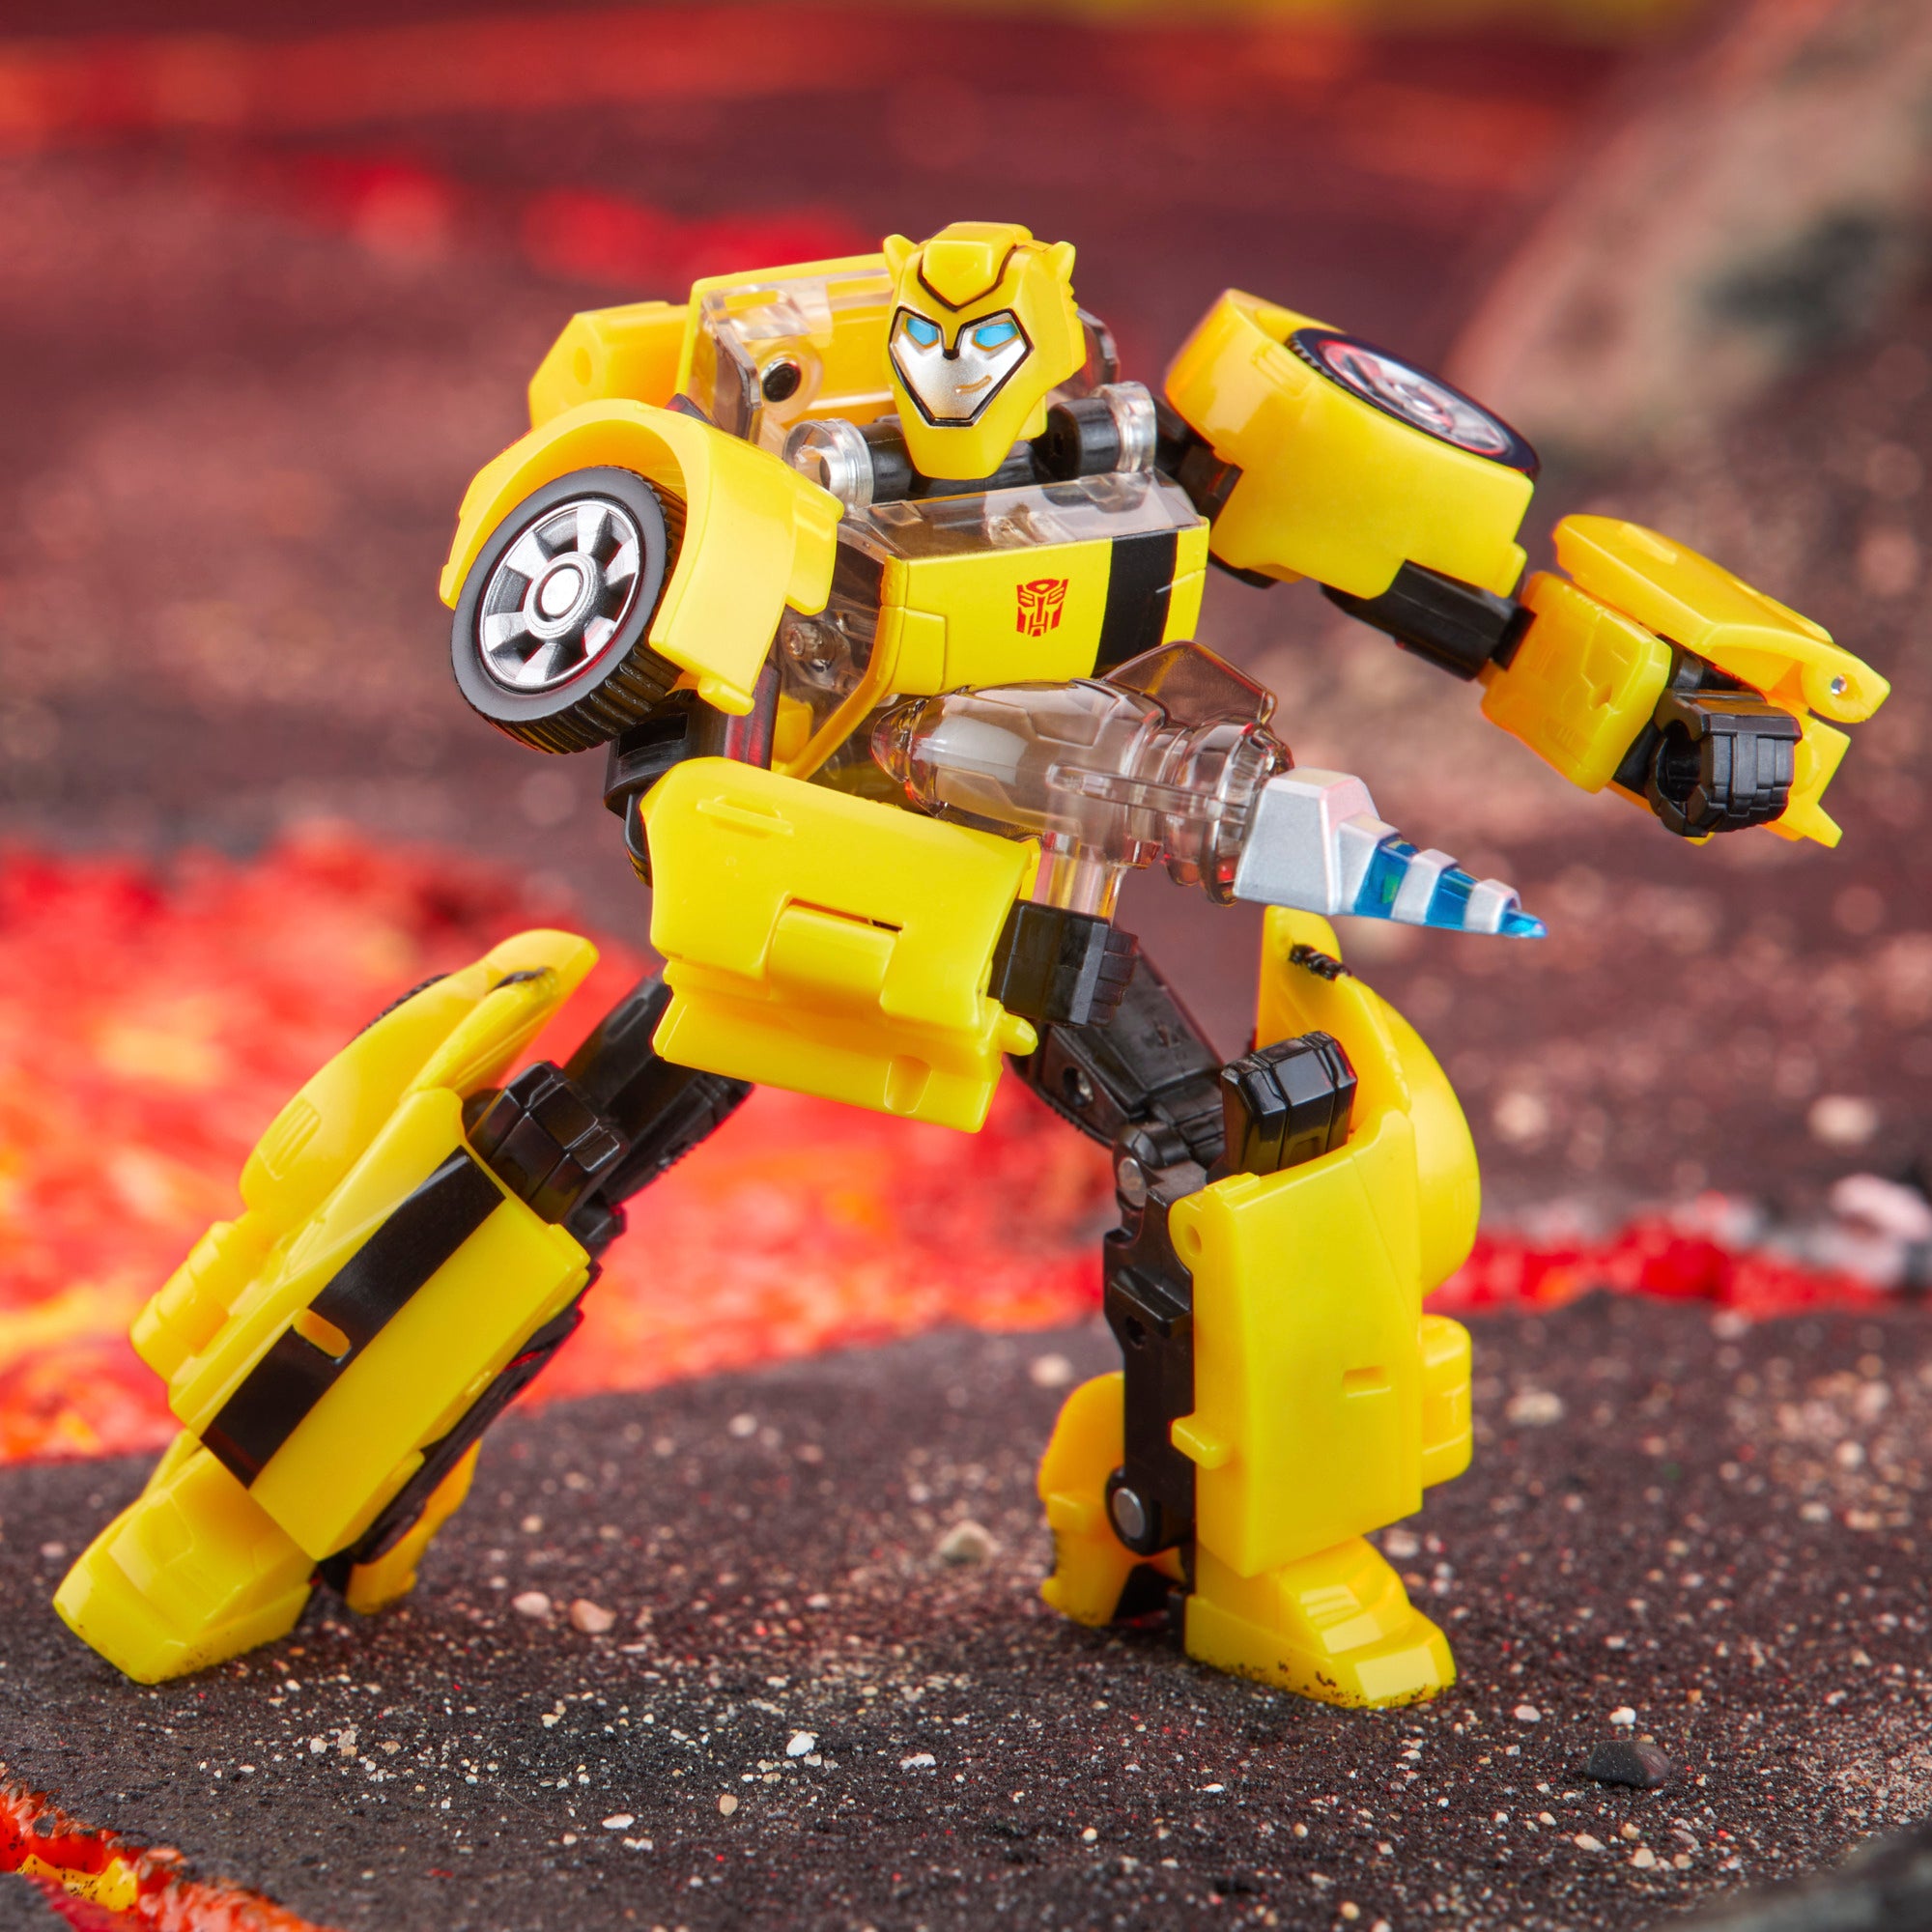 Transformers, Bumblebee Autobot Banner Aluminum Water Bottle #transformers  #robotsindisguise #kidscartoon #superher…